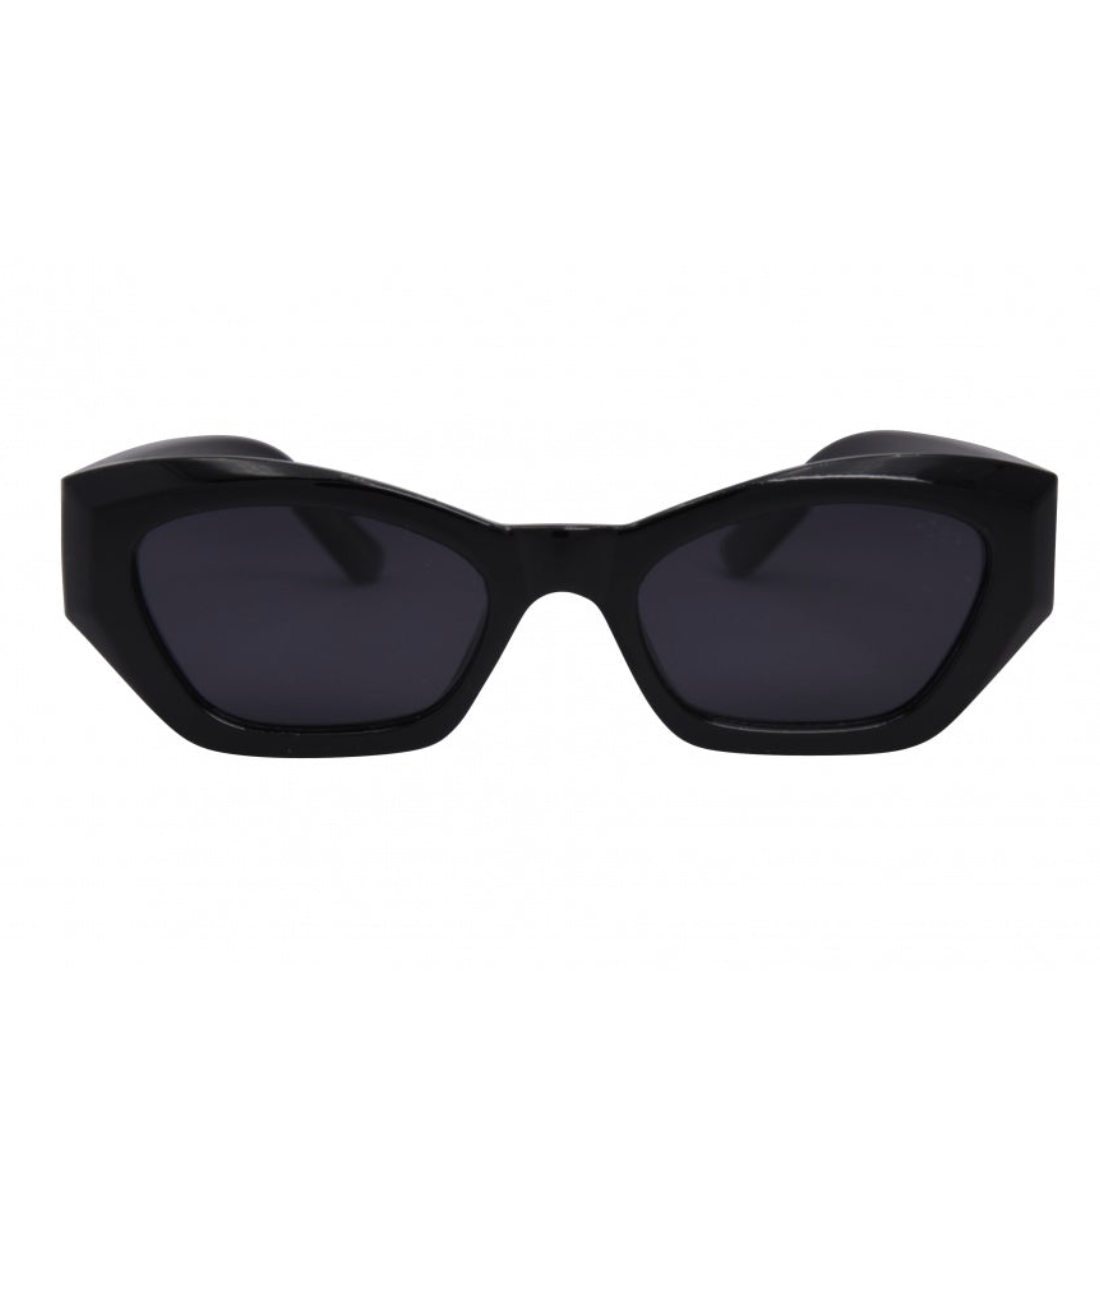 Beck iSea Sunglasses - Black/Smoke - Clothe Boutique